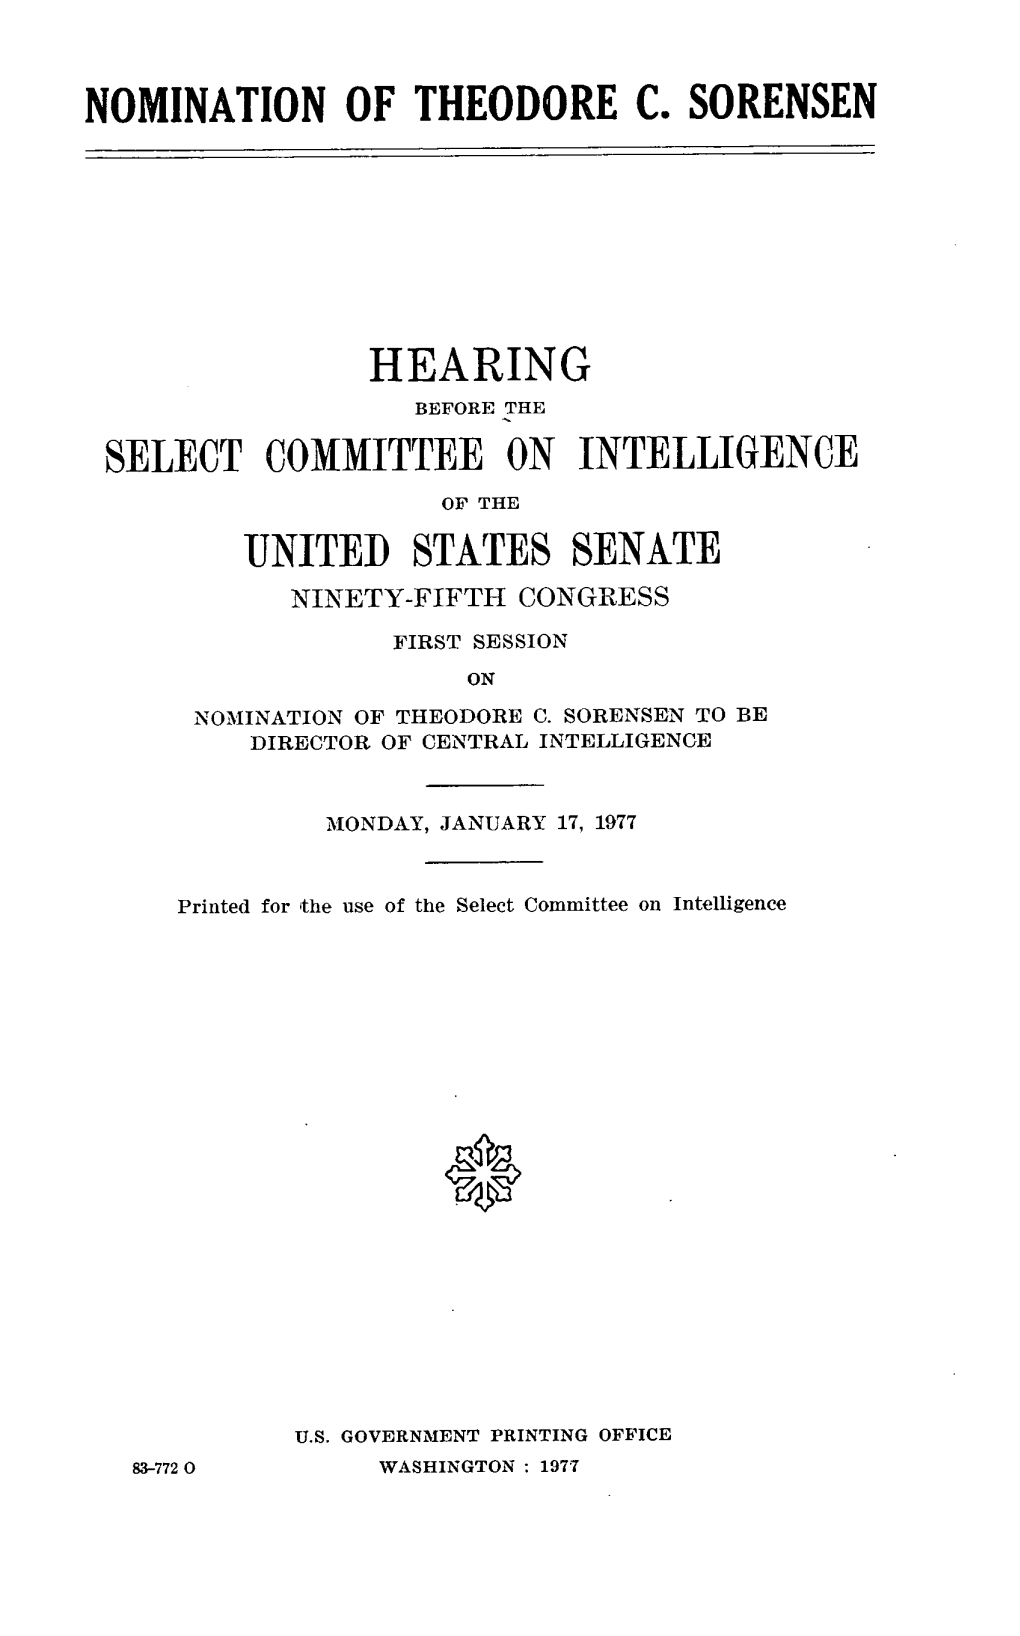 Nomination of Theodore C. Sorensen Hearing